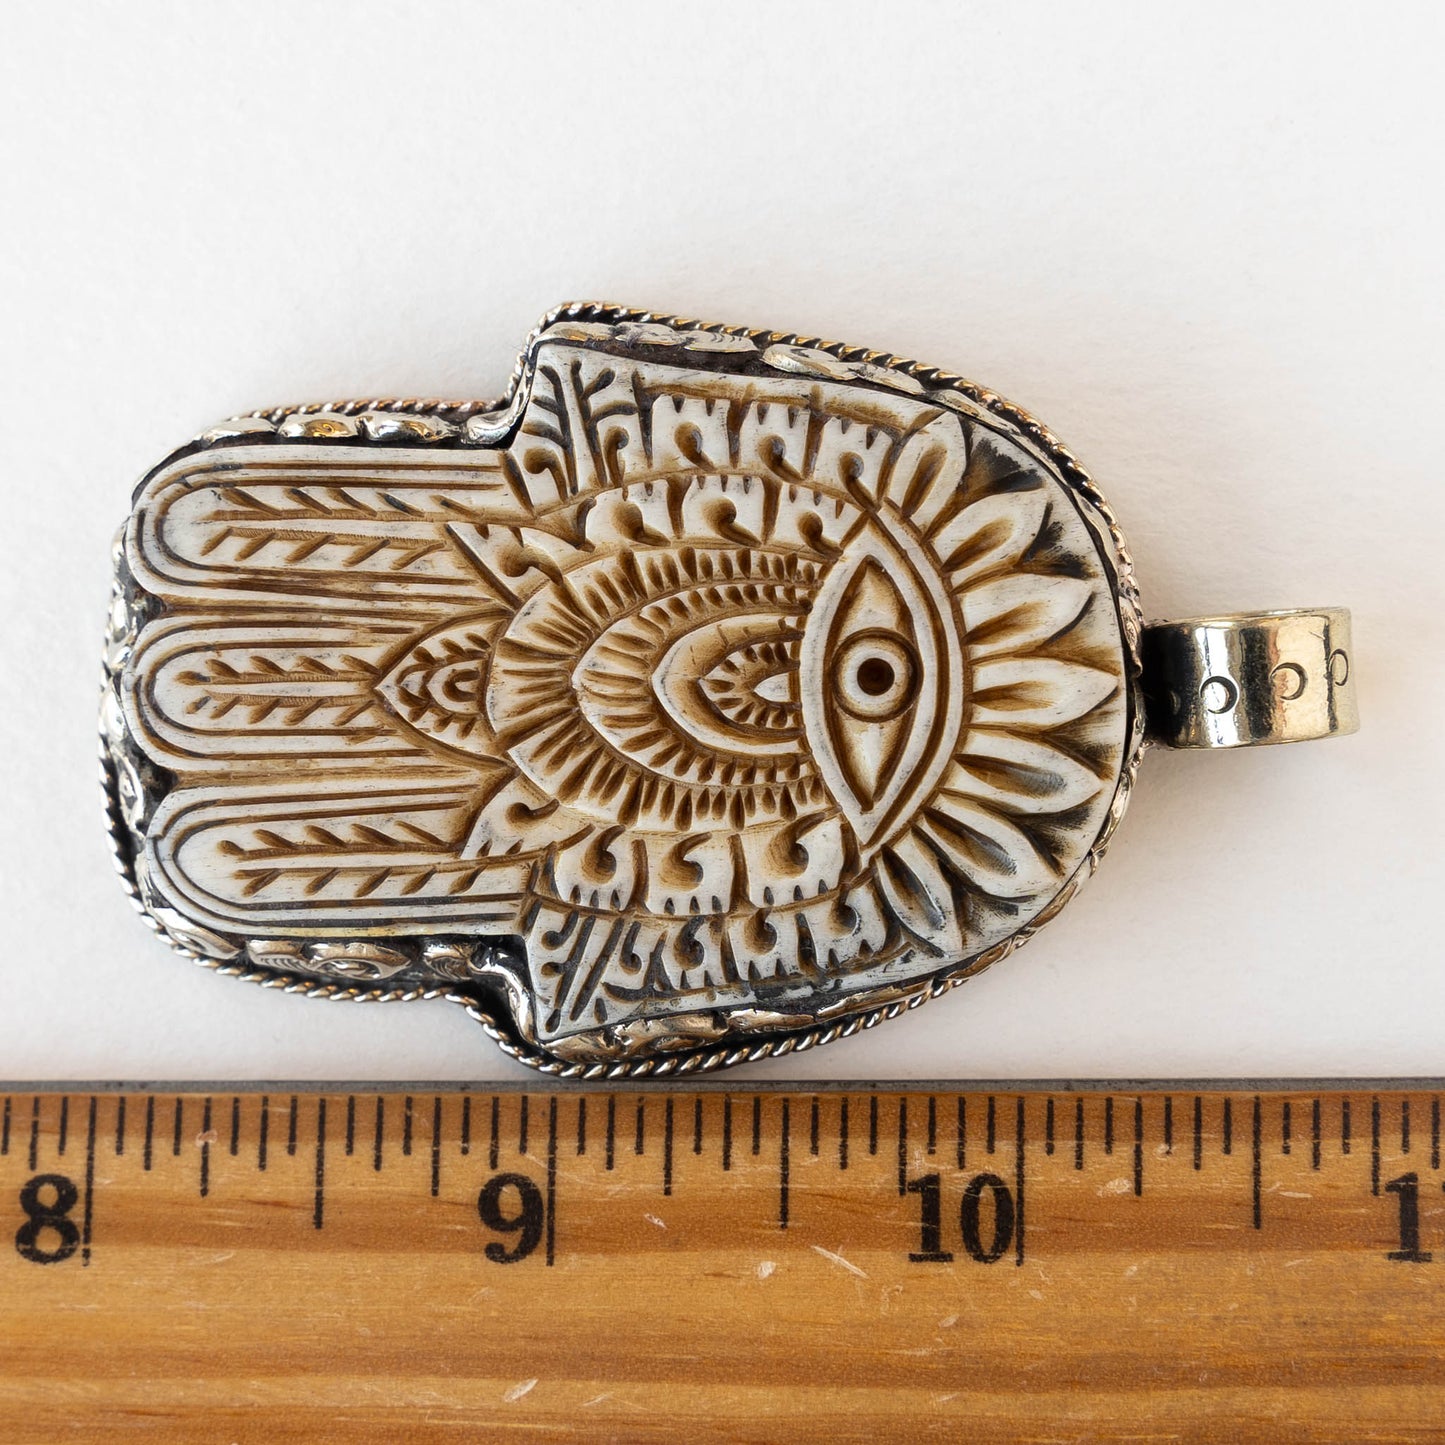 57mm Hamsa Hand Pendant set in Tibetan Silver - 1 piece